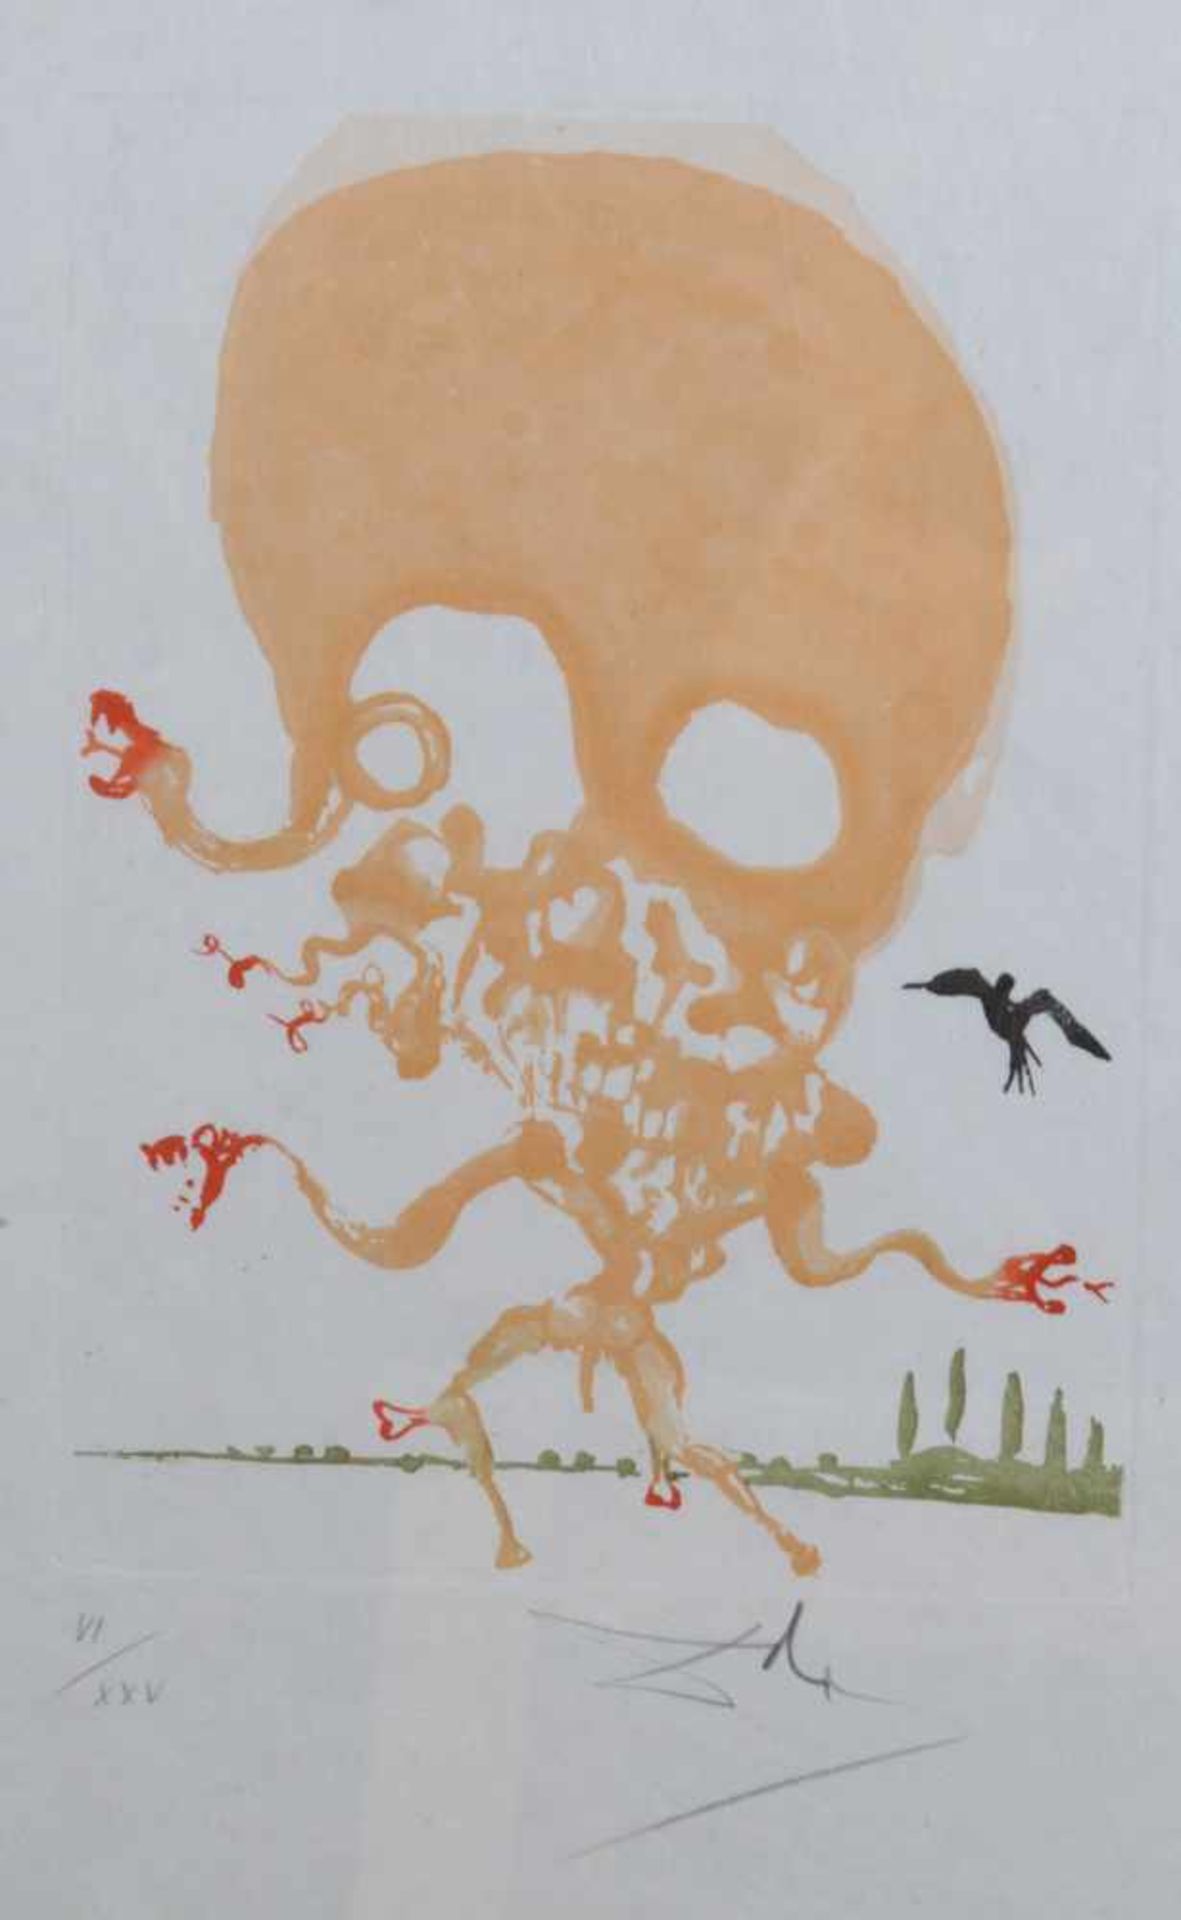 Salvador DALI (1904-1989)"Medusa"Grafik- farbiger Tiefdruck auf Japan, 45 cm x 31,5 cm,